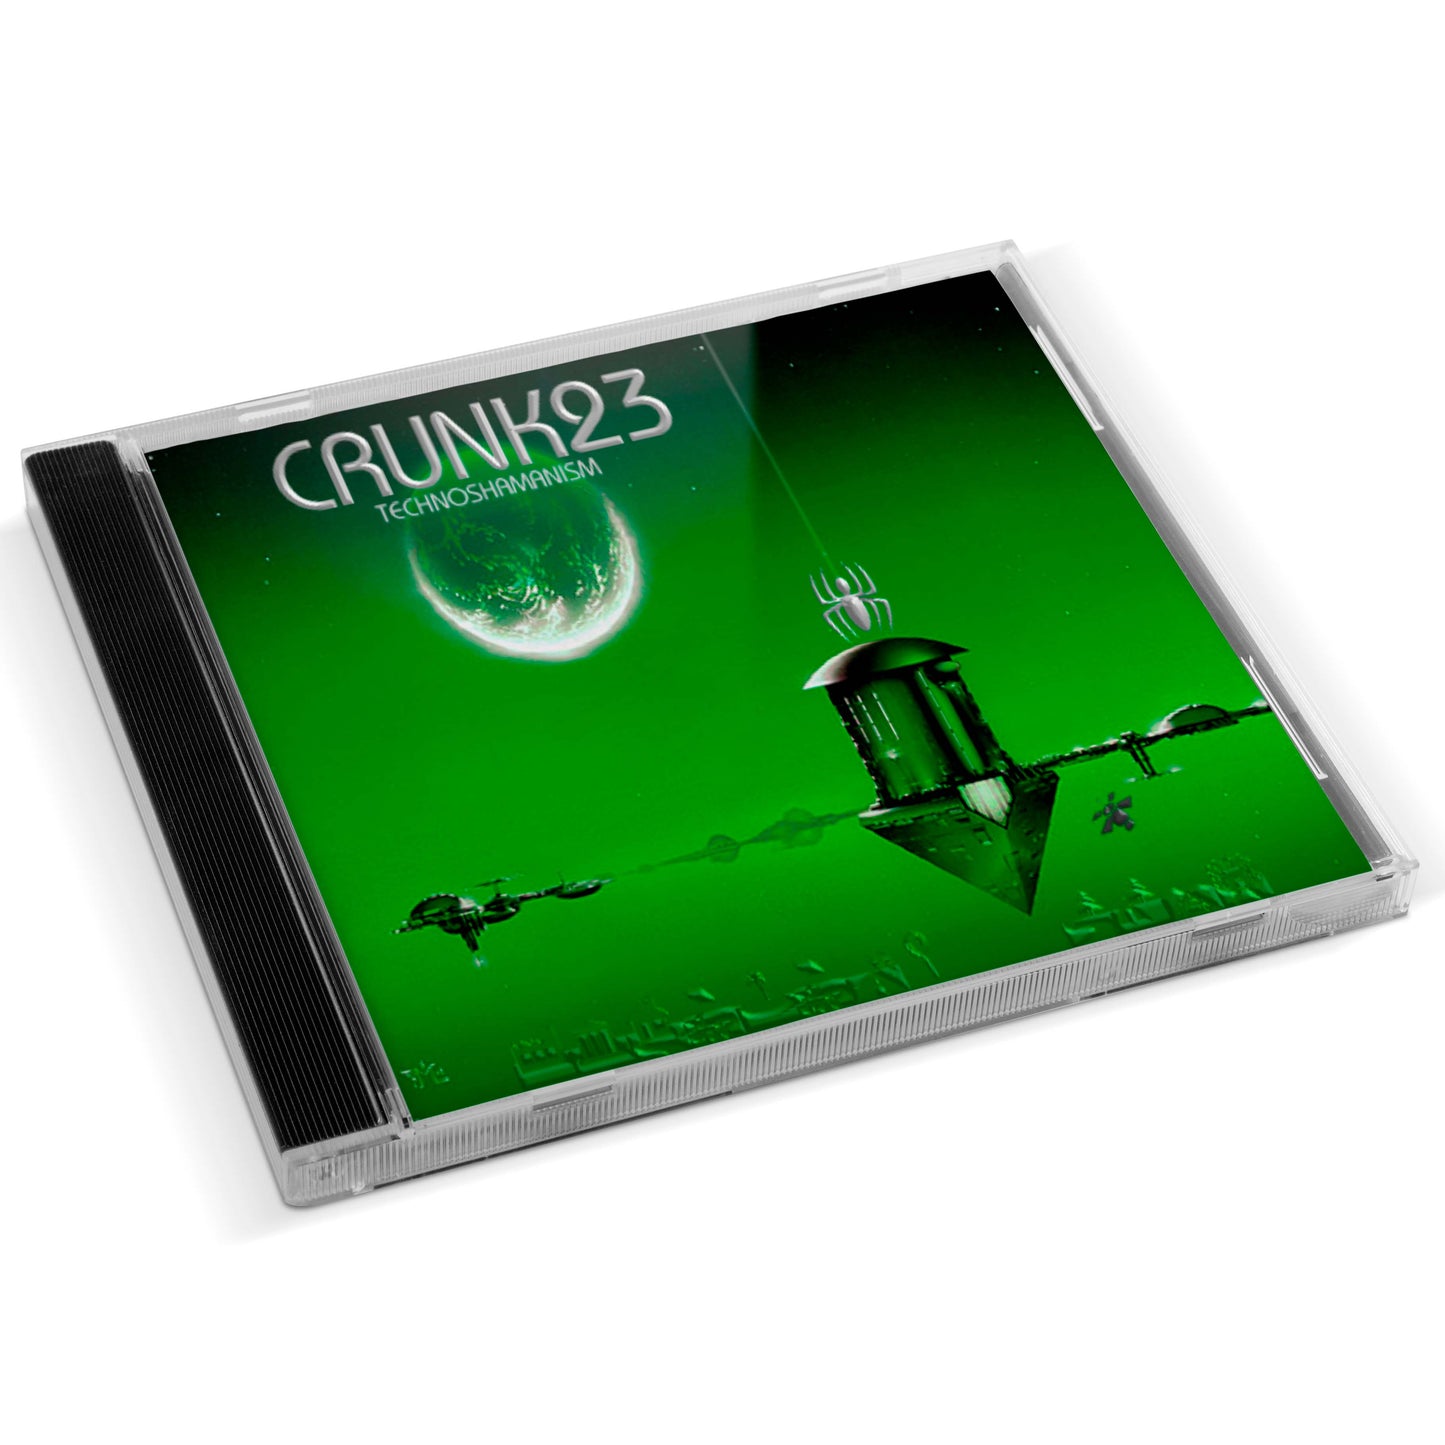 Crunk23 - Technoshamanism CD